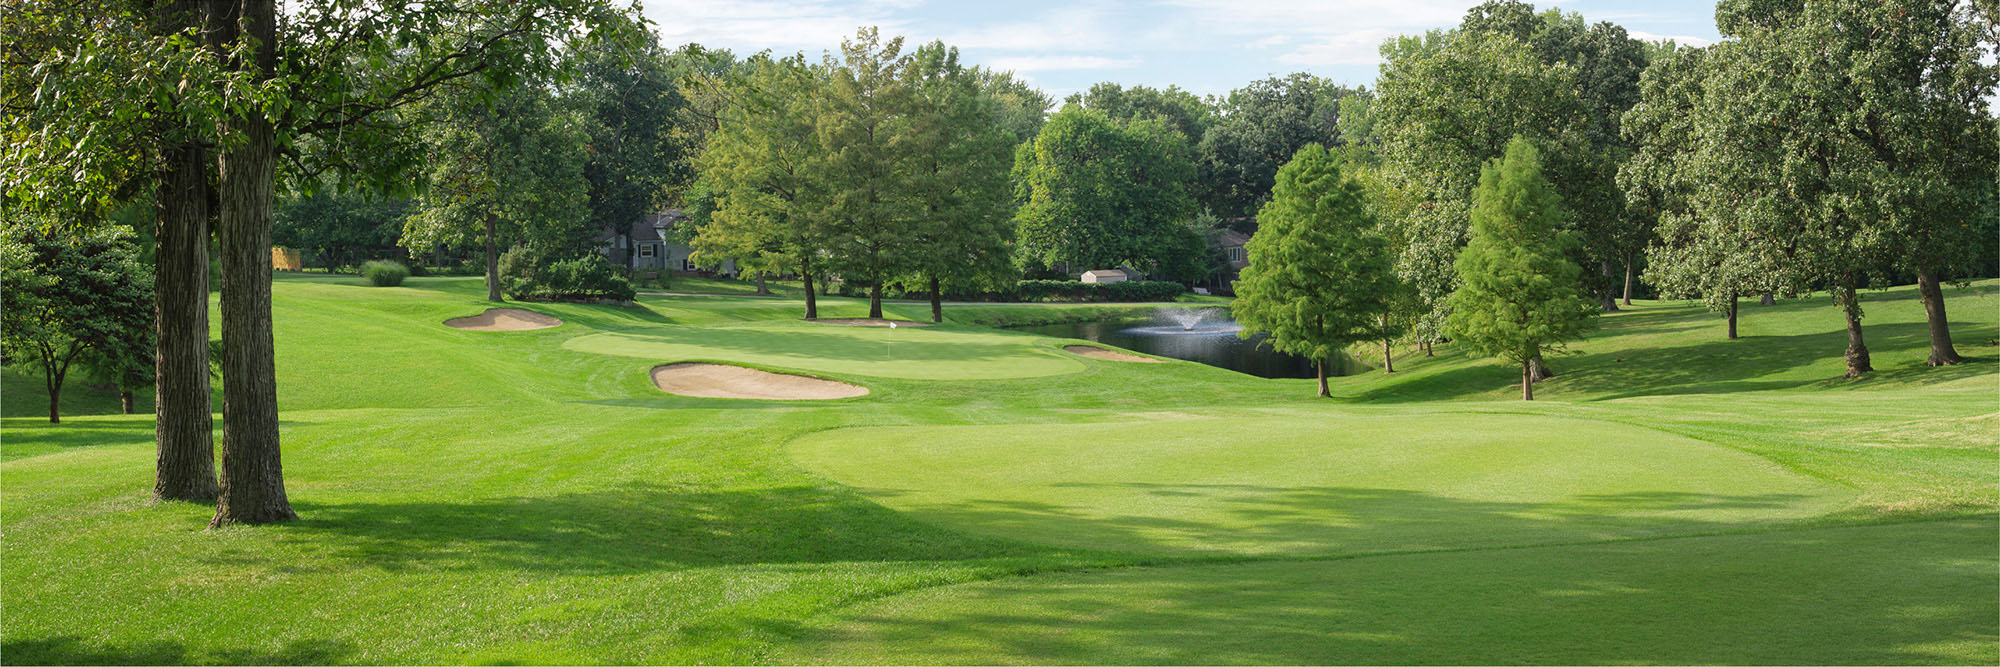 Golf Course Image - Milburn No. 15